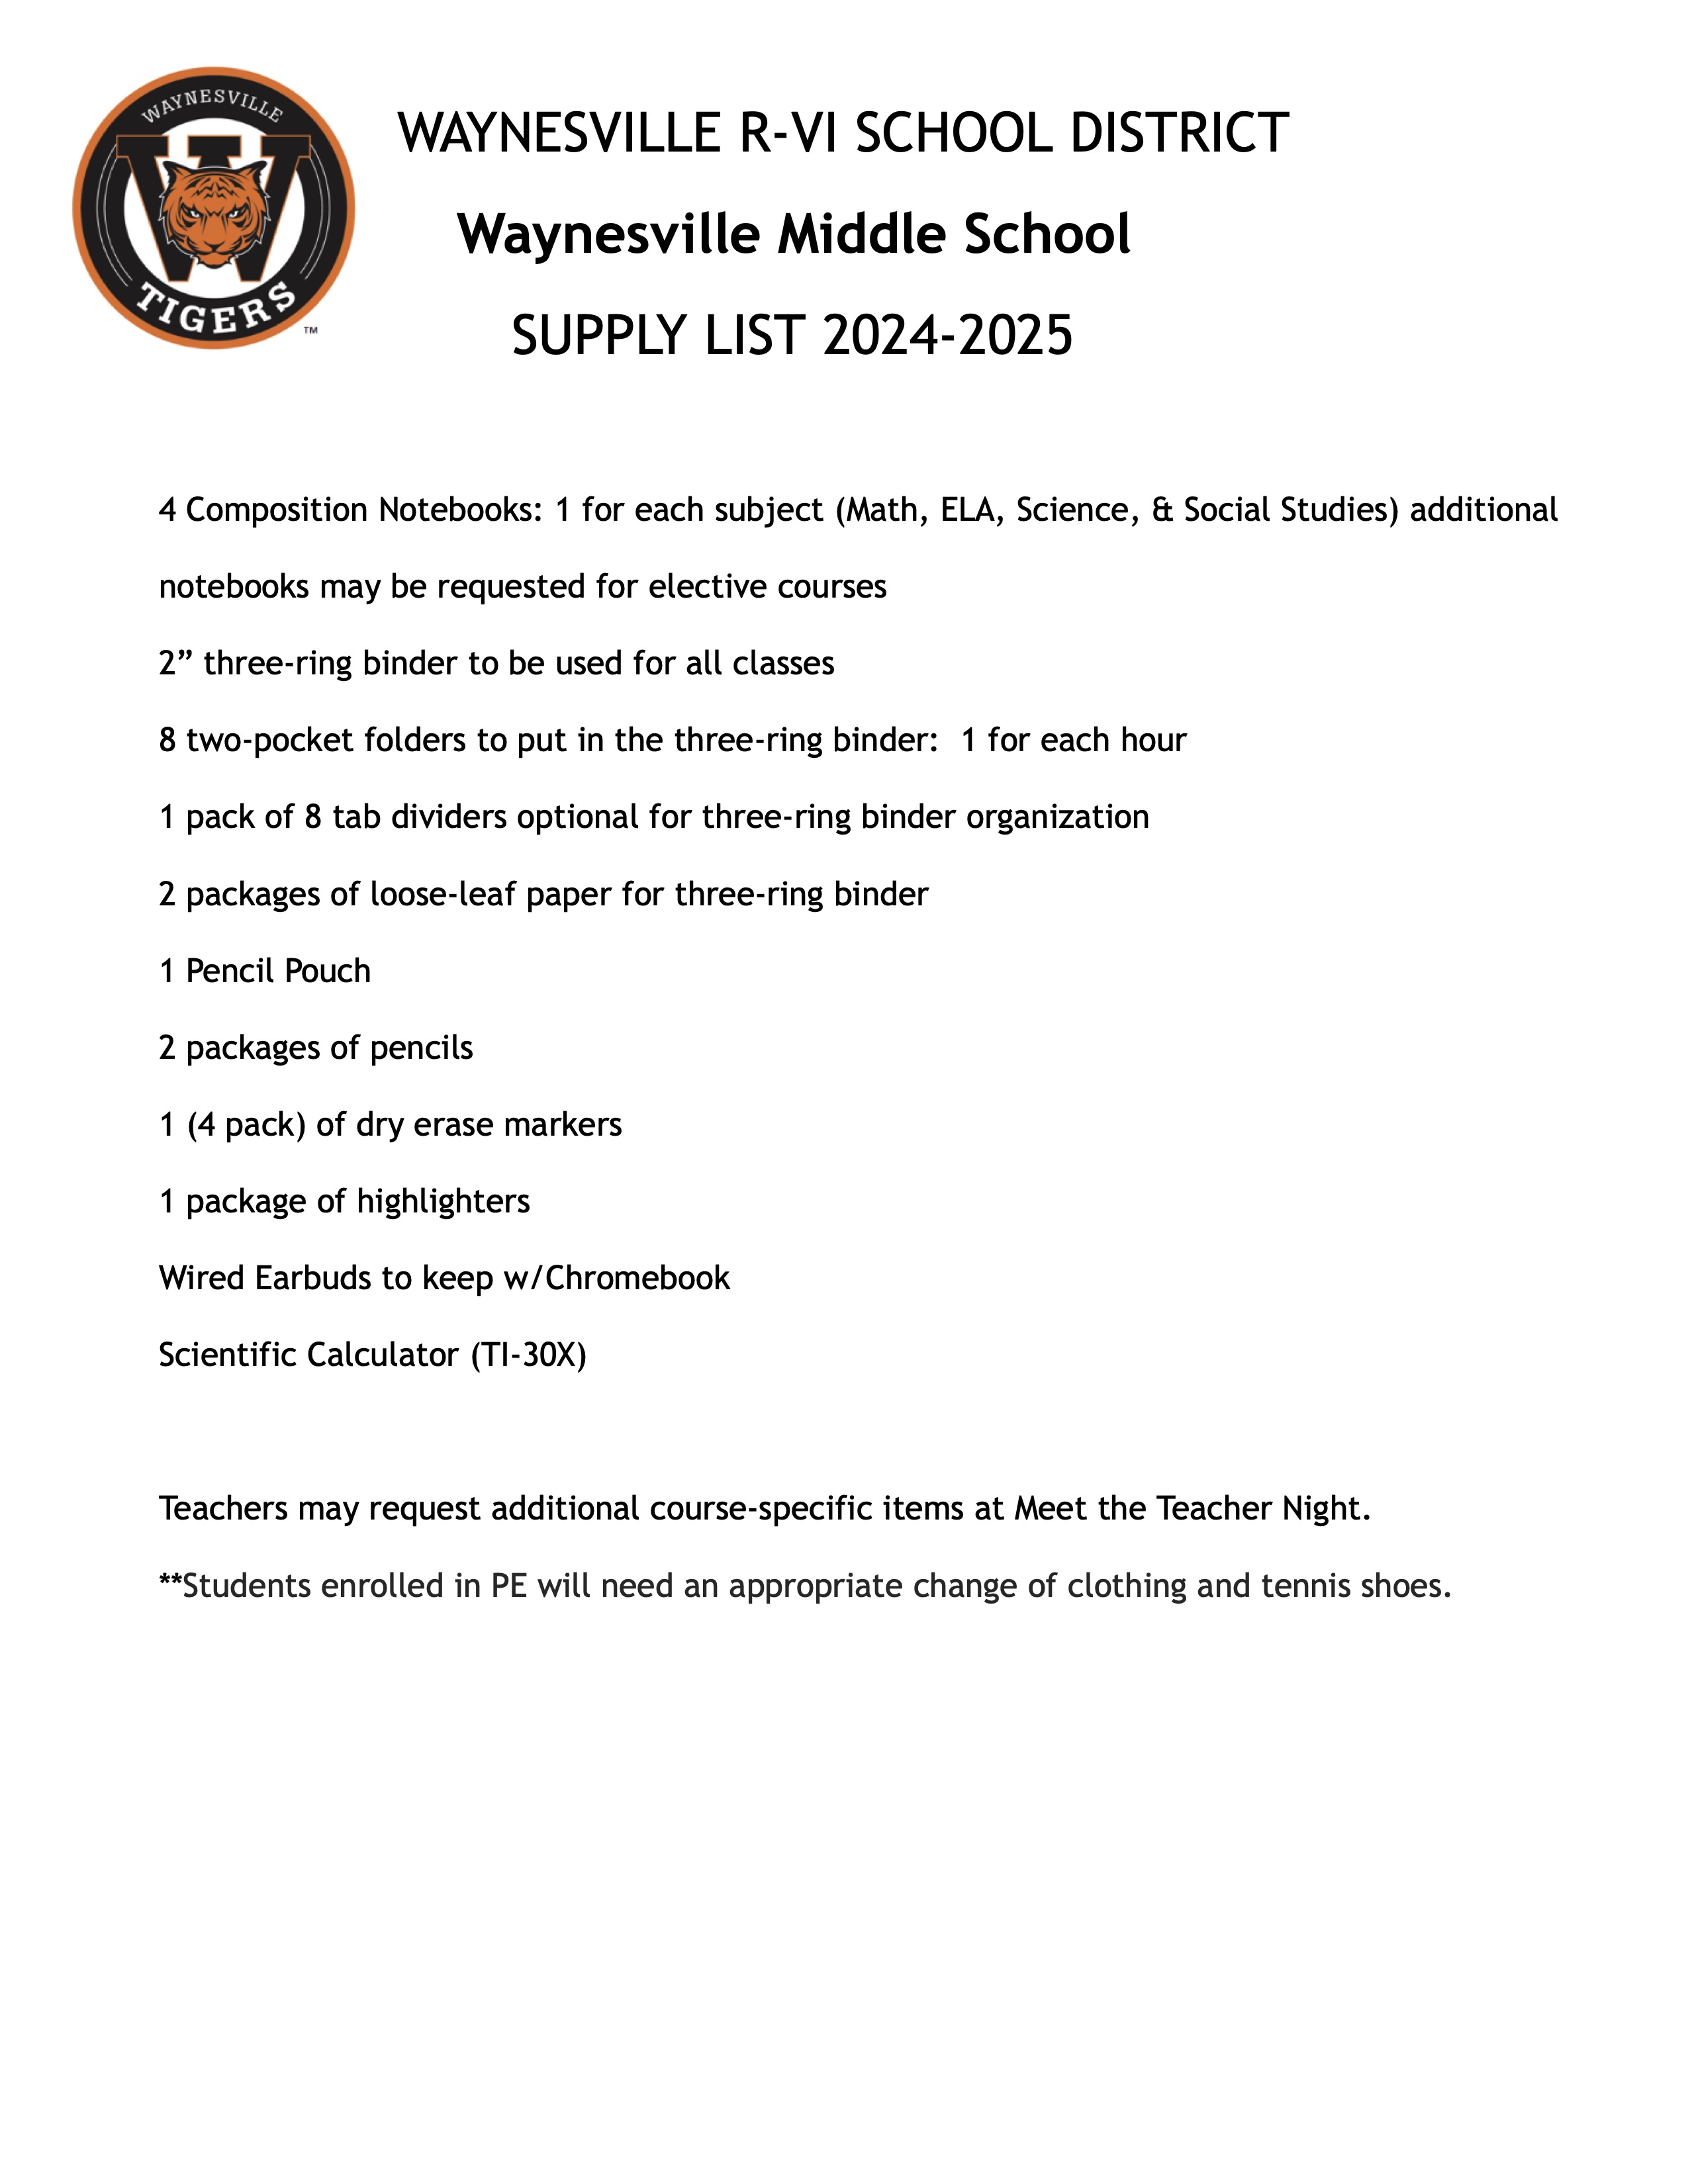 Waynesville Middle School Supply List